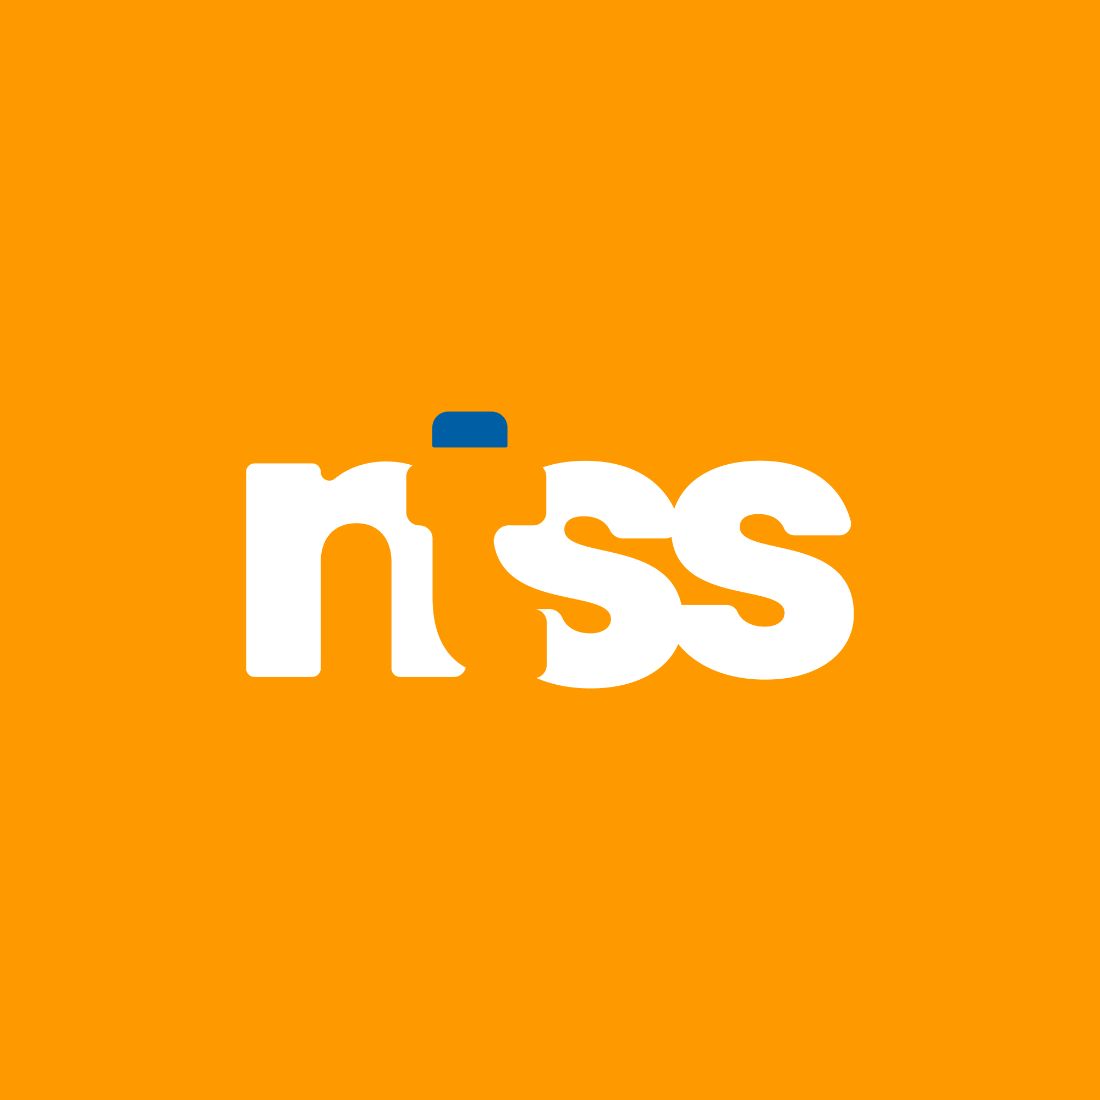 Ntss Lettering Logo White Design preview image.